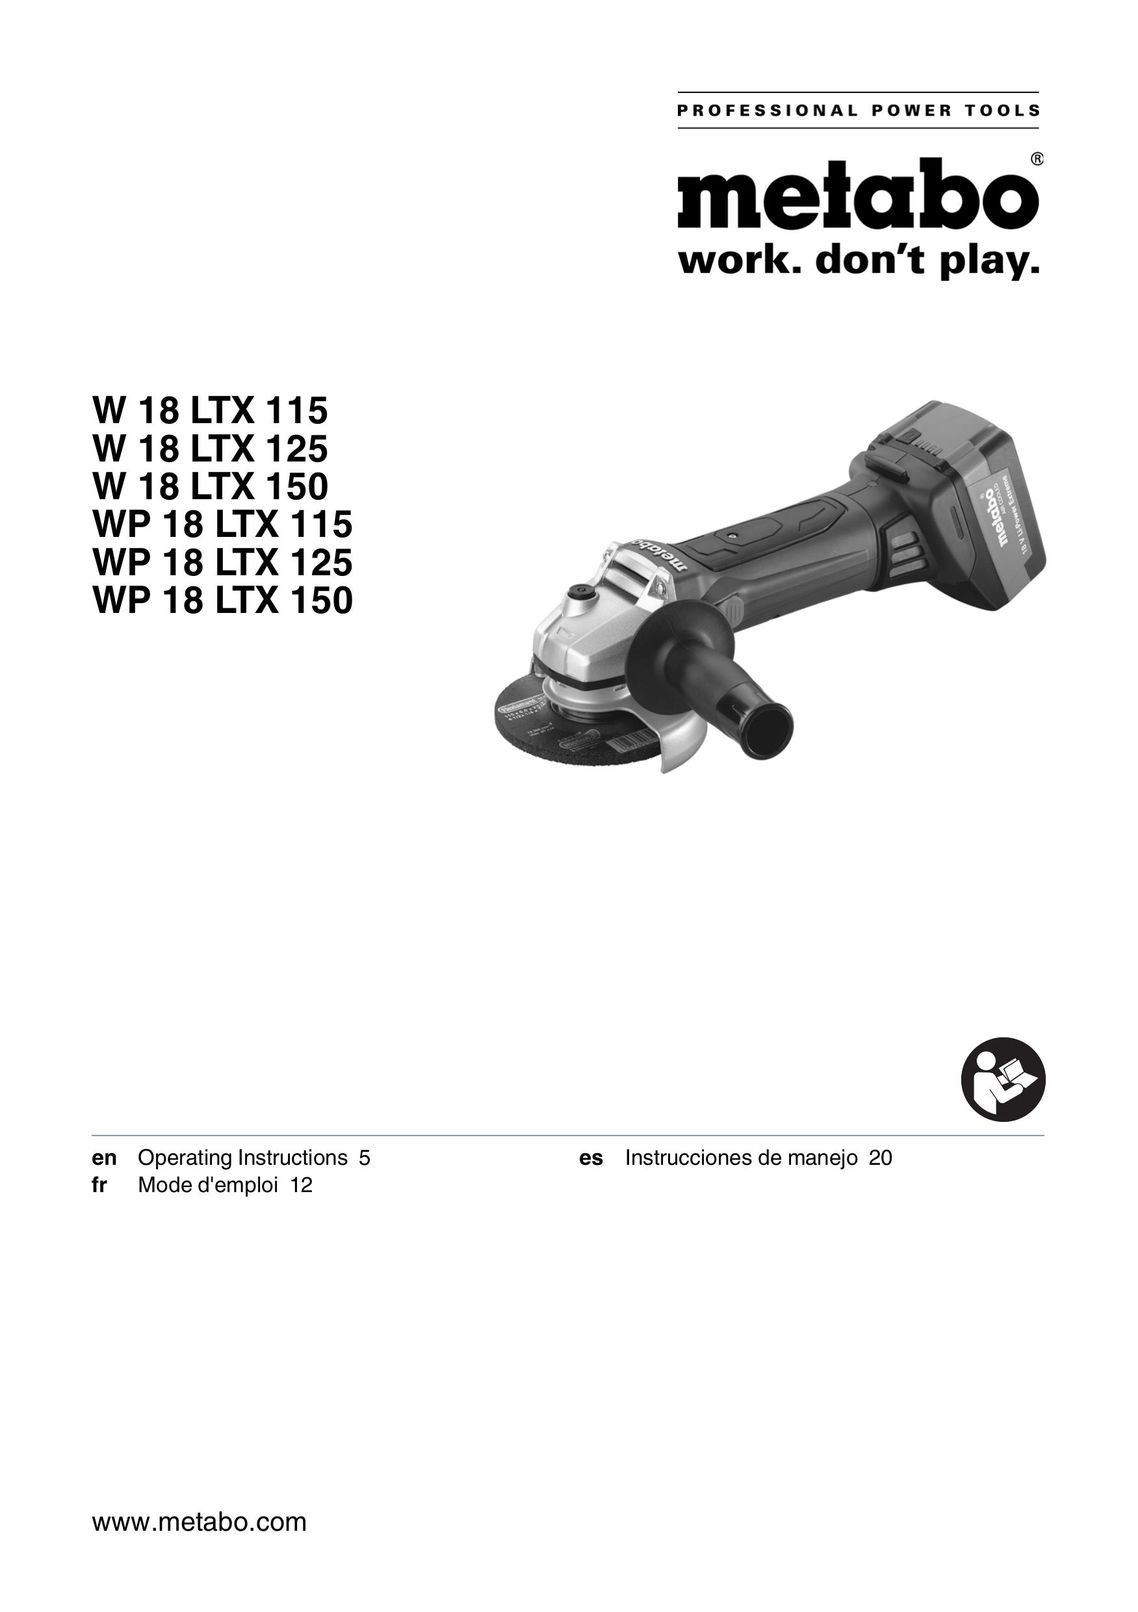 Metabo WP 18 LTX 150 Grinder User Manual